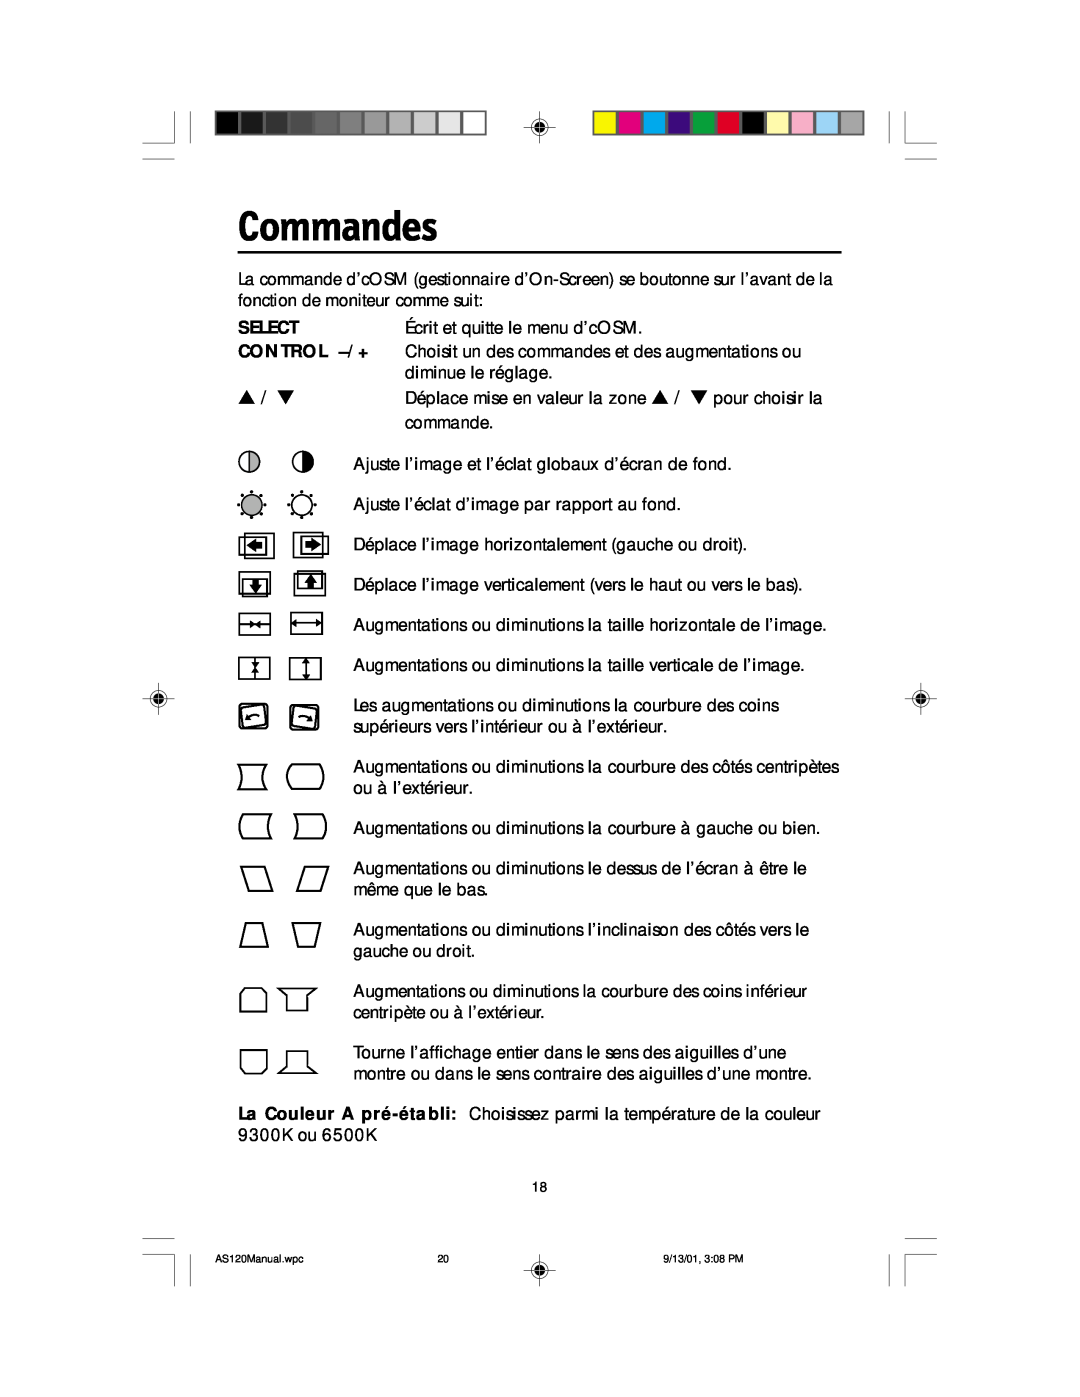 NEC AccuSync 120 user manual Commandes, Select, Control -/+ 